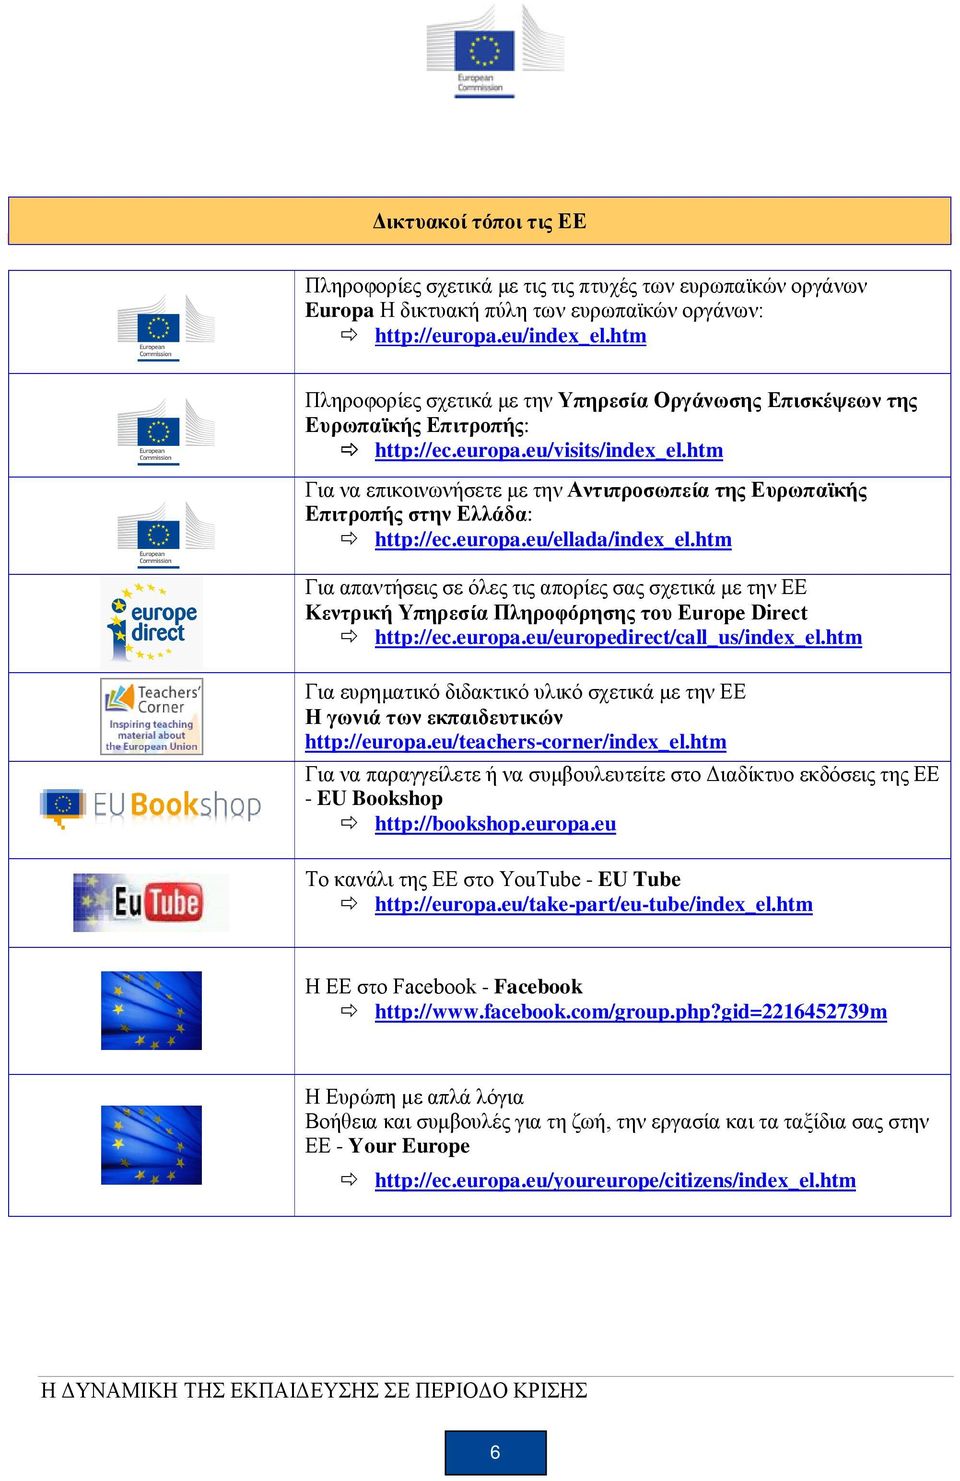 htm Για να επικοινωνήσετε με την Αντιπροσωπεία της Ευρωπαϊκής Επιτροπής στην Ελλάδα: http://ec.europa.eu/ellada/index_el.